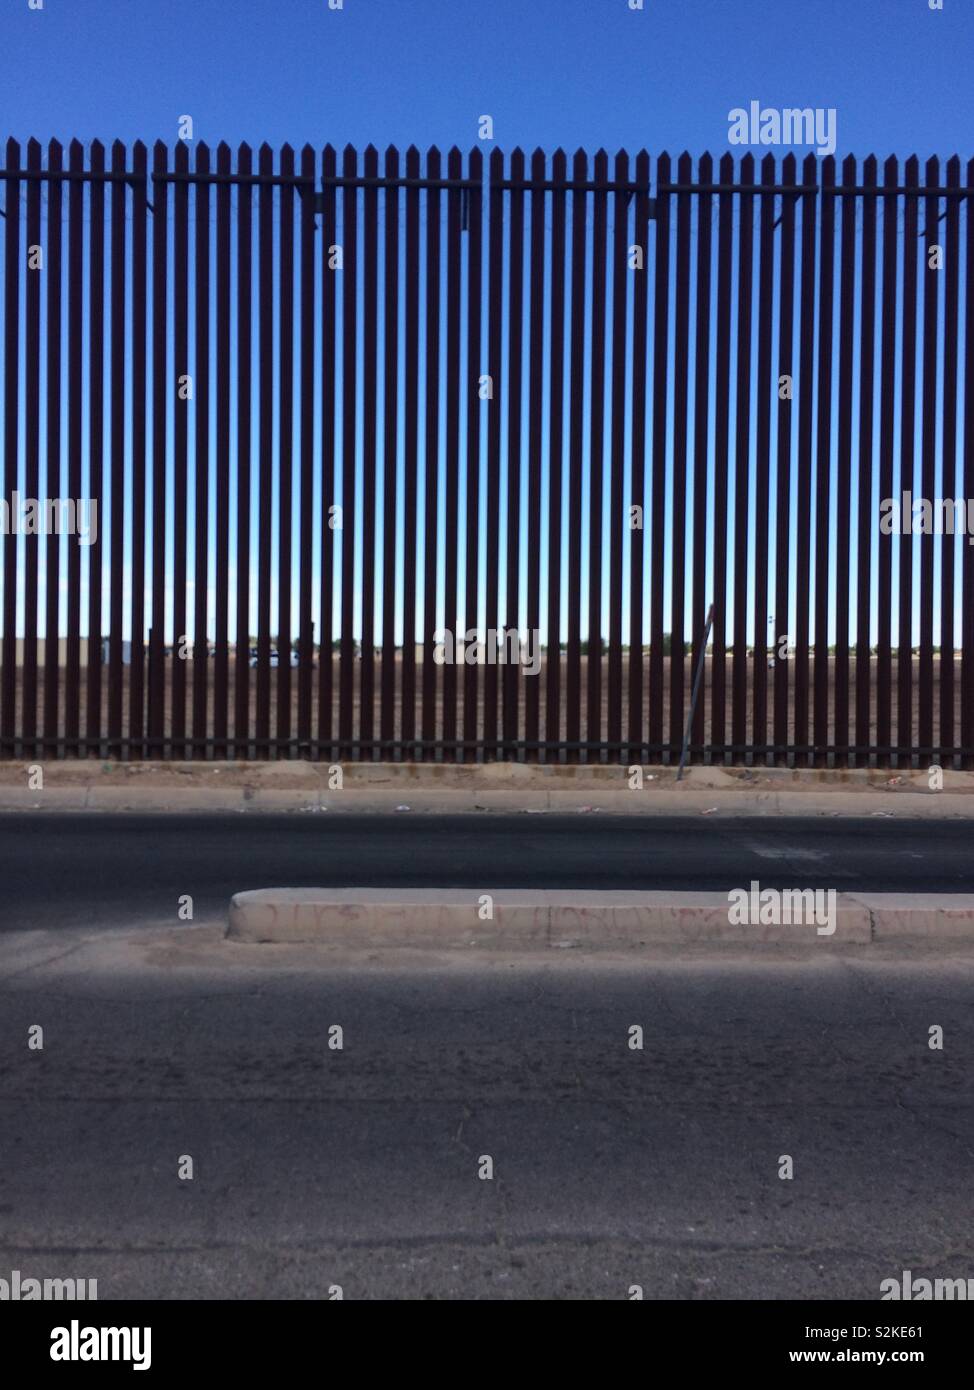 US-Mexico Border fence Stock Photo